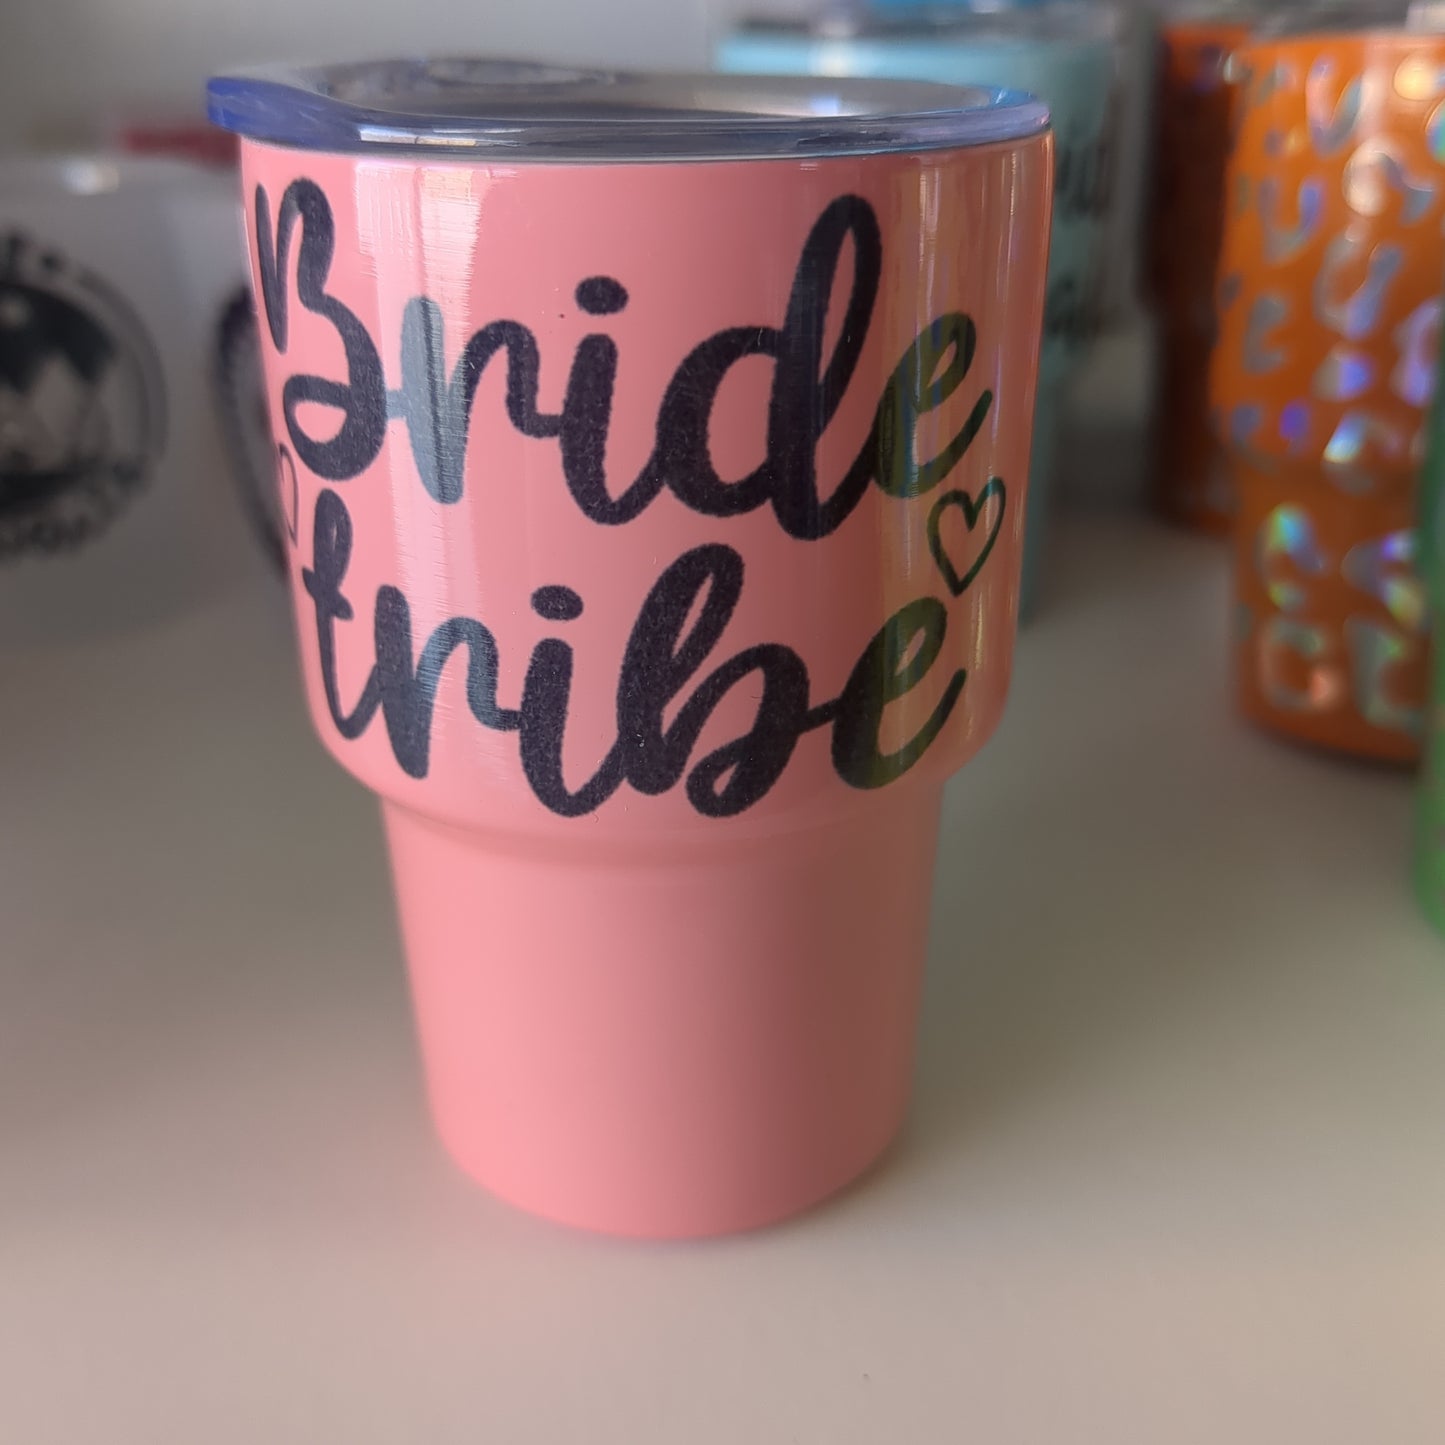 Shot glass / mini Tumbler salmon color says bride tribe